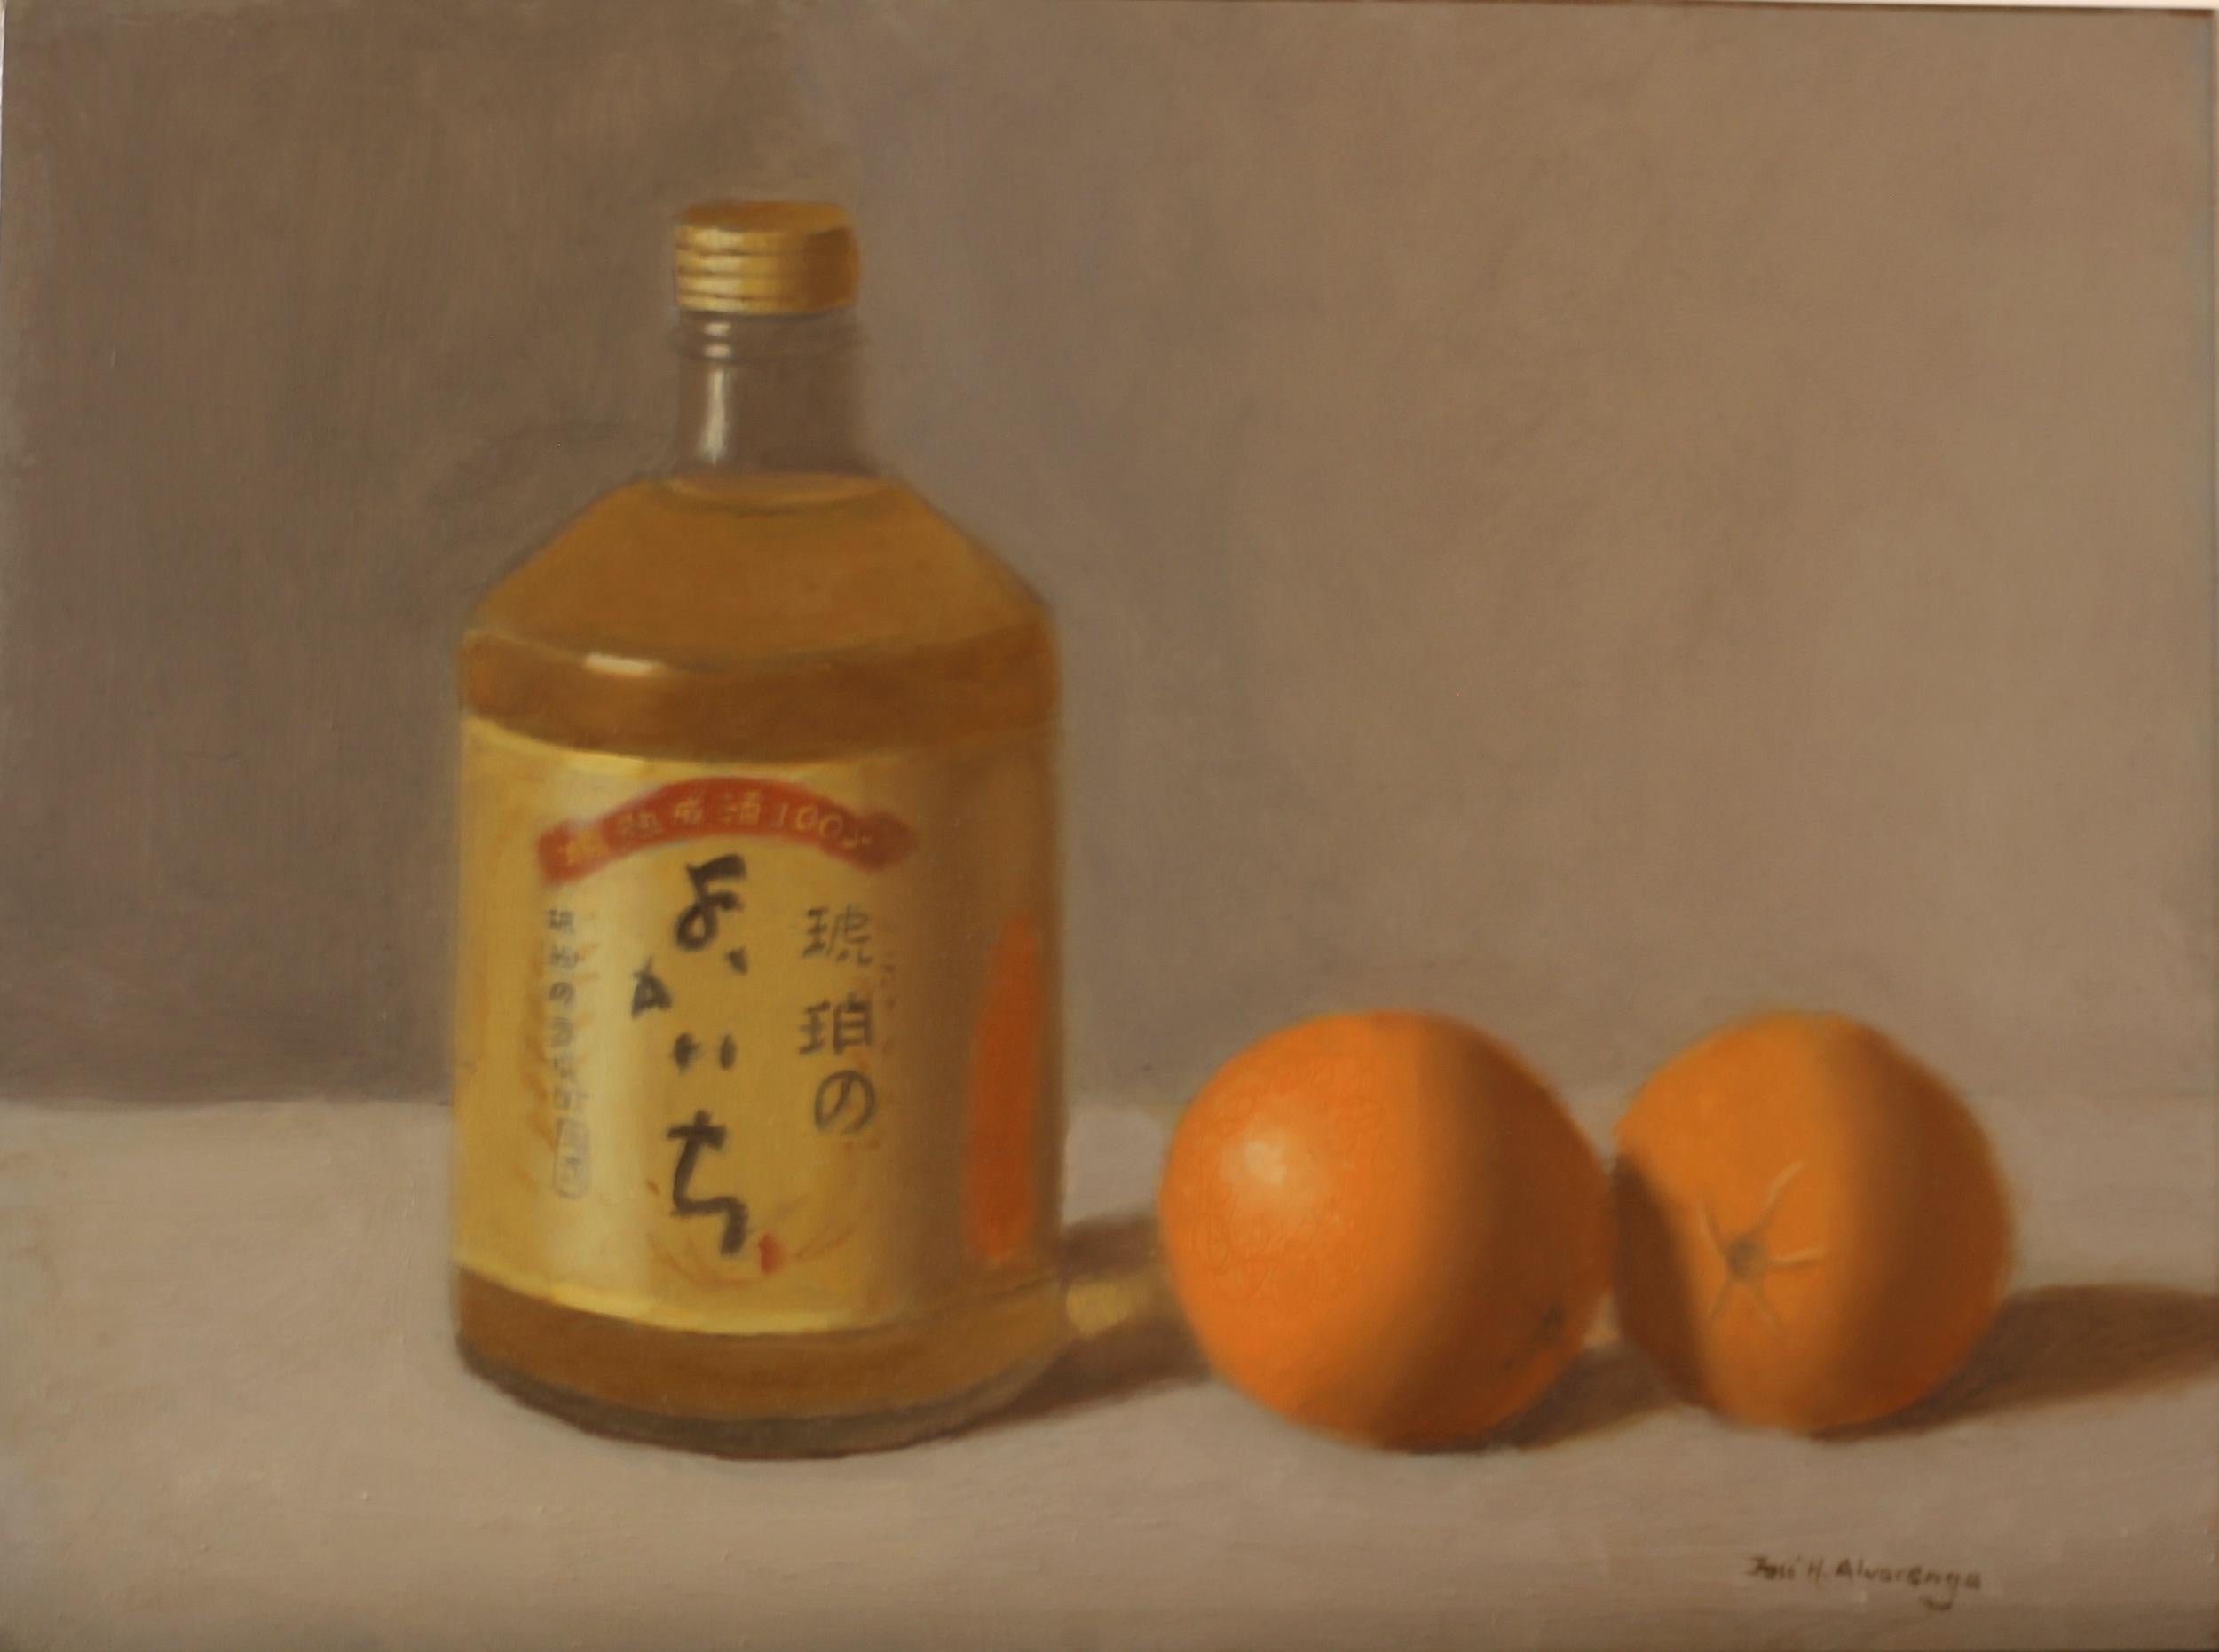 Jose H. Alvarenga Still-Life Painting - Oranges and Japanese Liqour